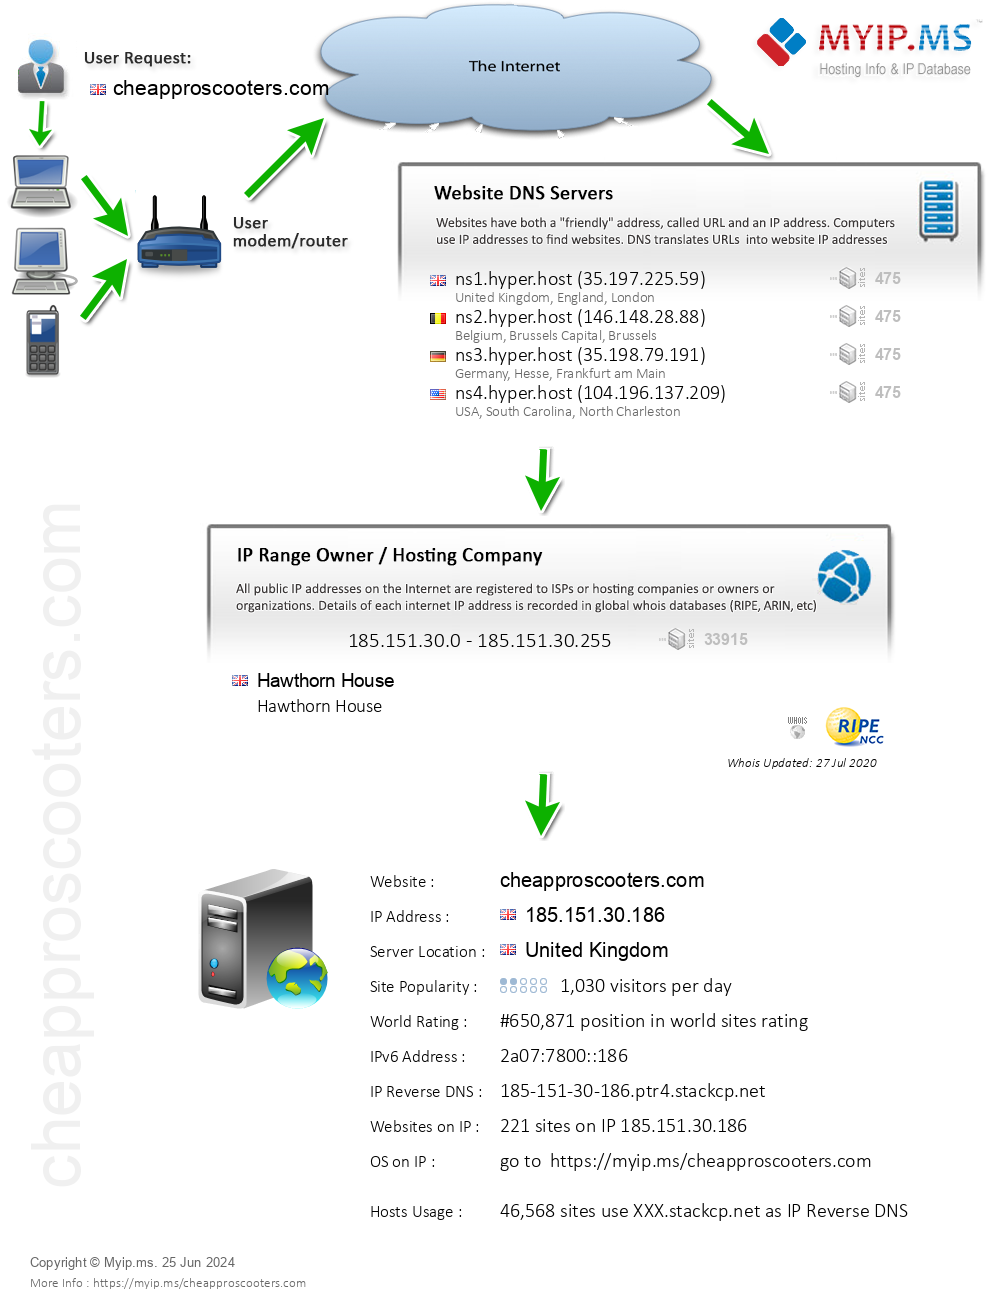 Cheapproscooters.com - Website Hosting Visual IP Diagram